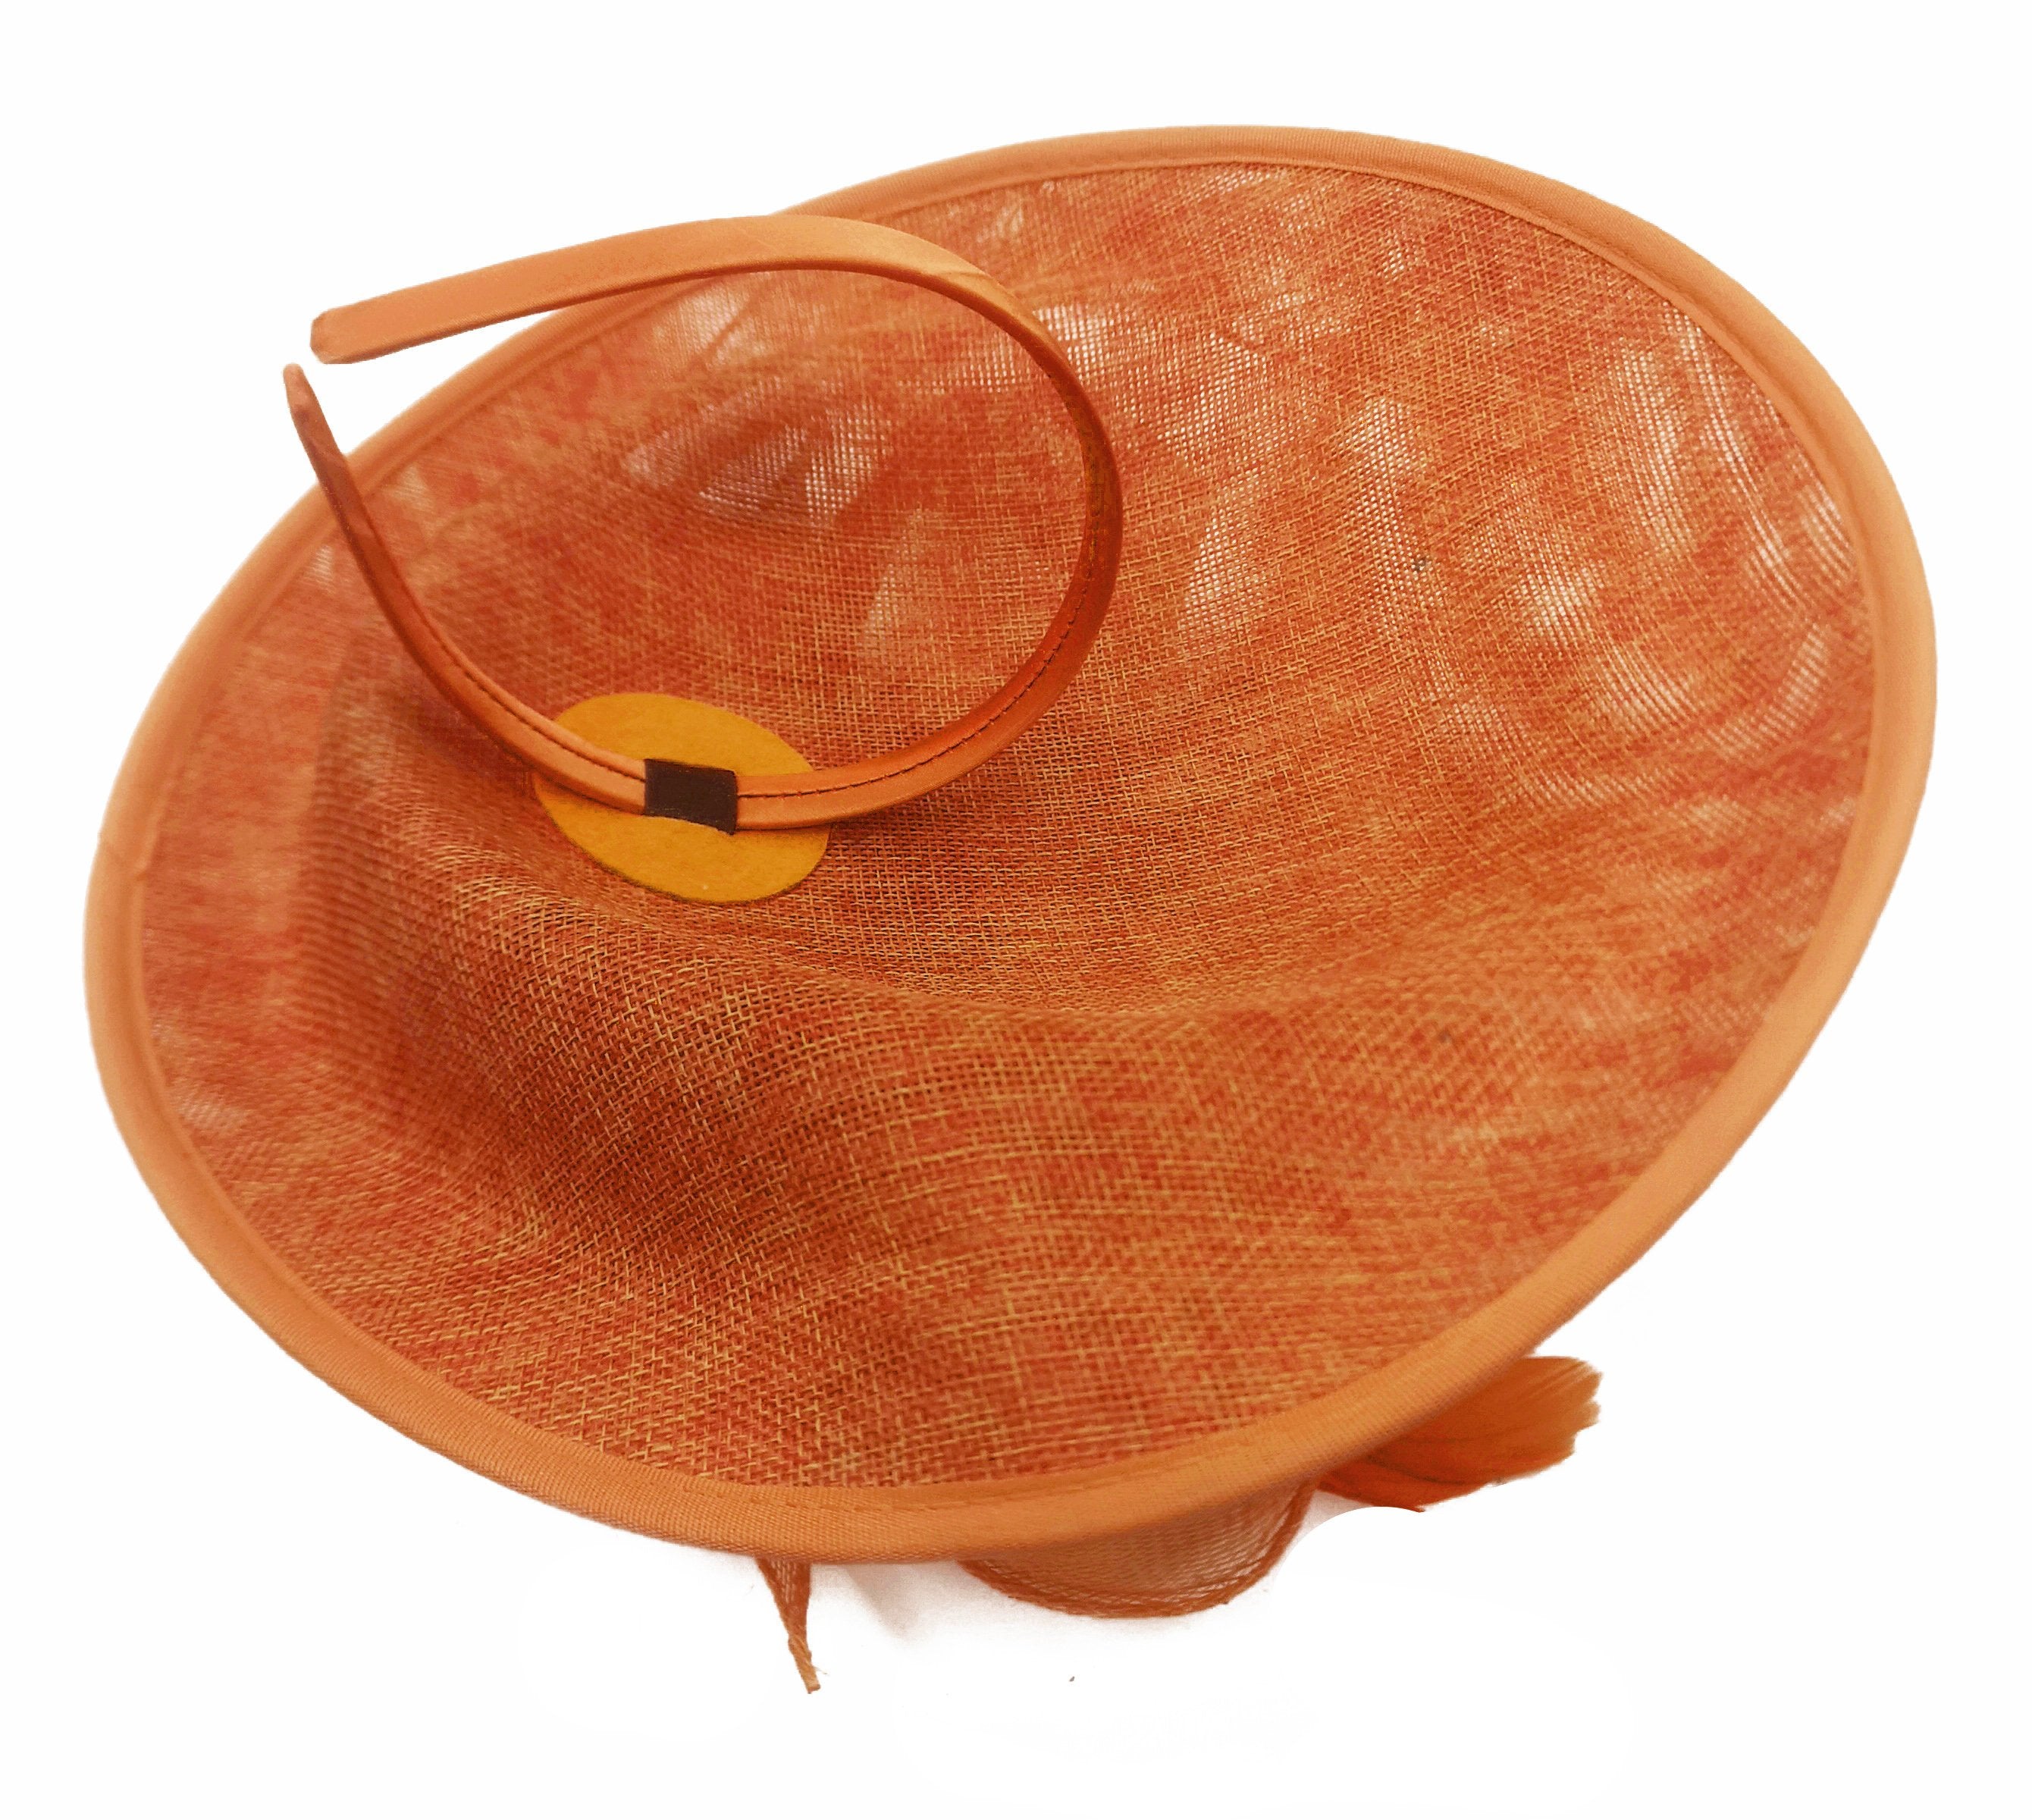 Caprilite Big Saucer Sinamay Orange & Fuchsia Hot Pink Mixed Colour Fascinator On Headband